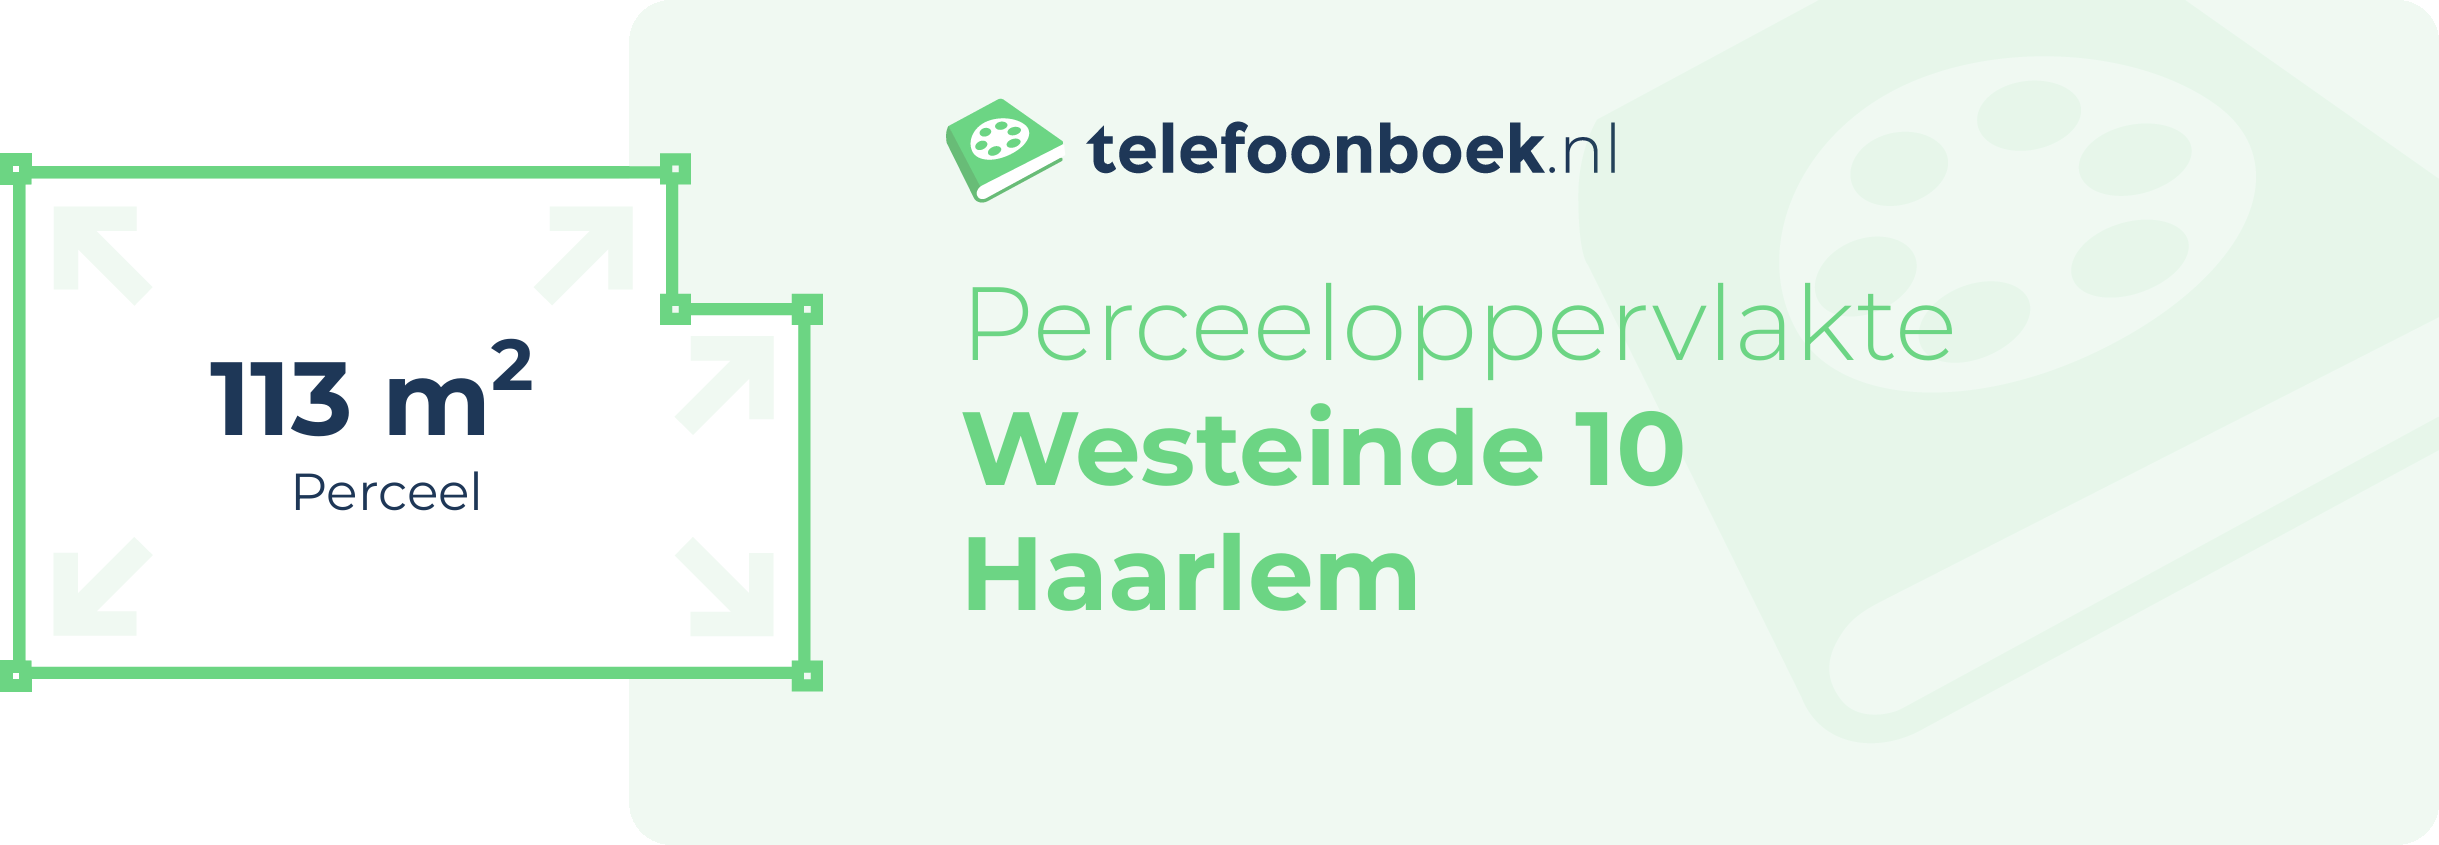 Perceeloppervlakte Westeinde 10 Haarlem